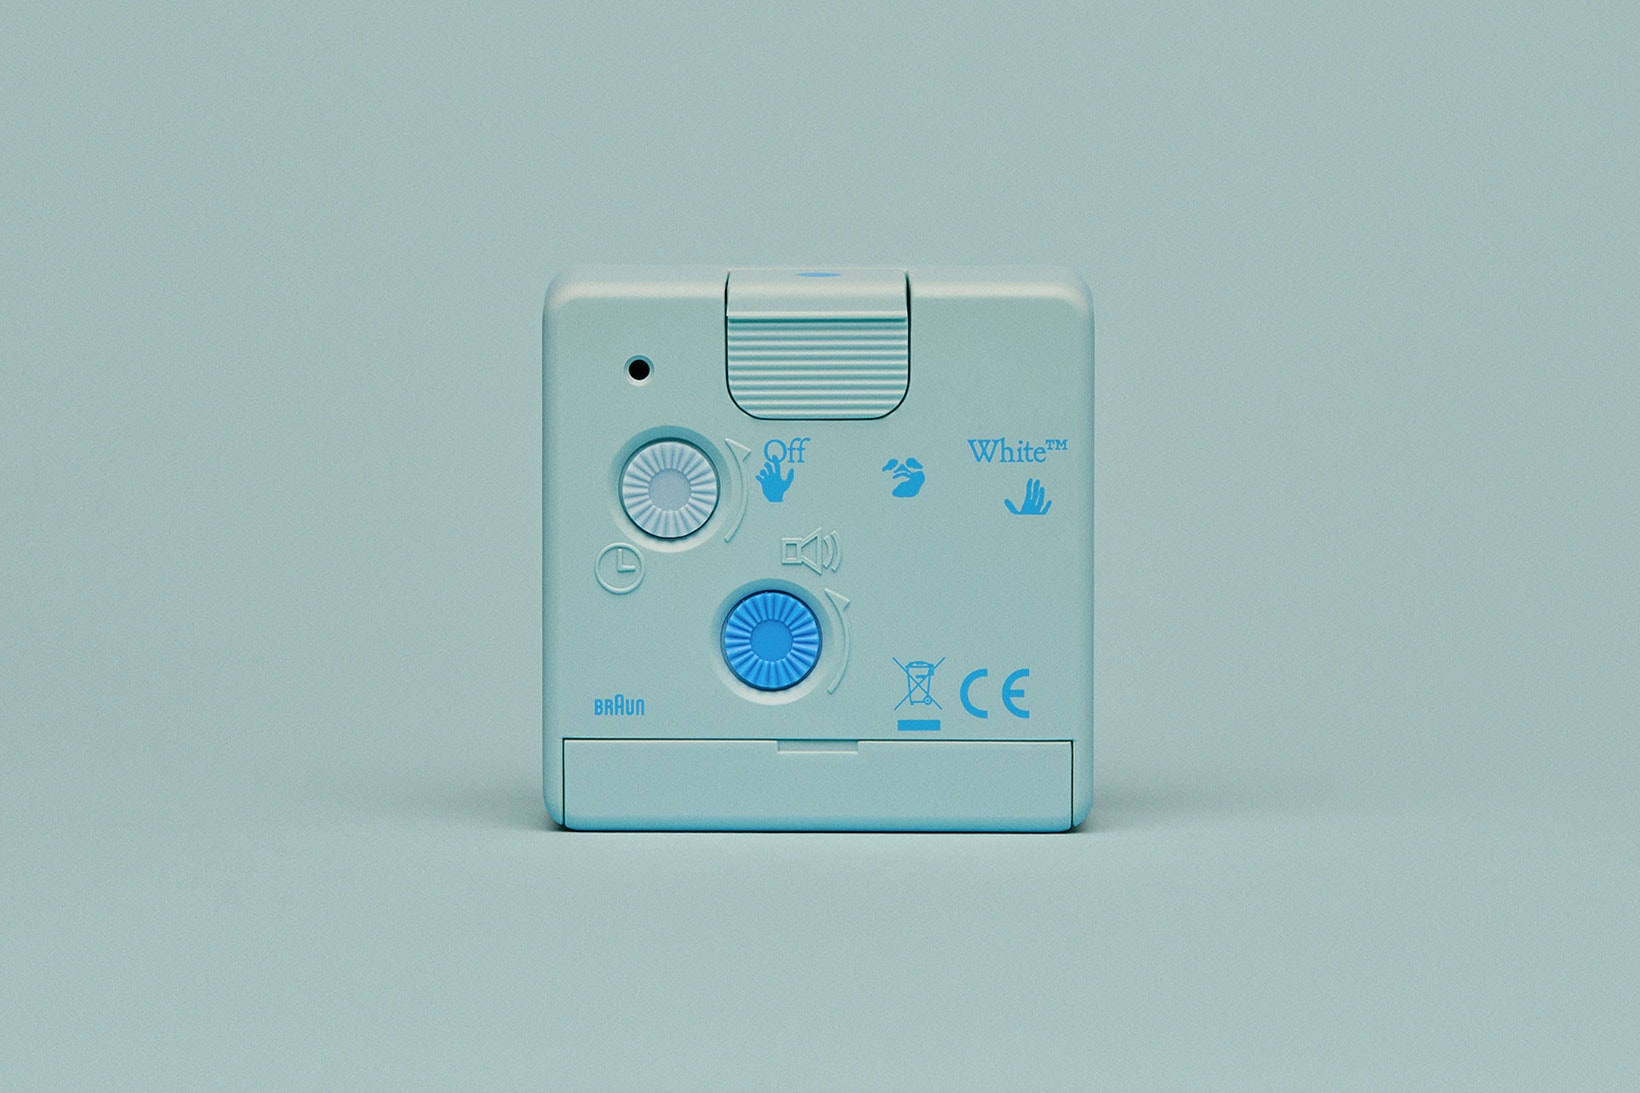 off-white braun alarm clocks collaboration home decor accessories blue back control buttons